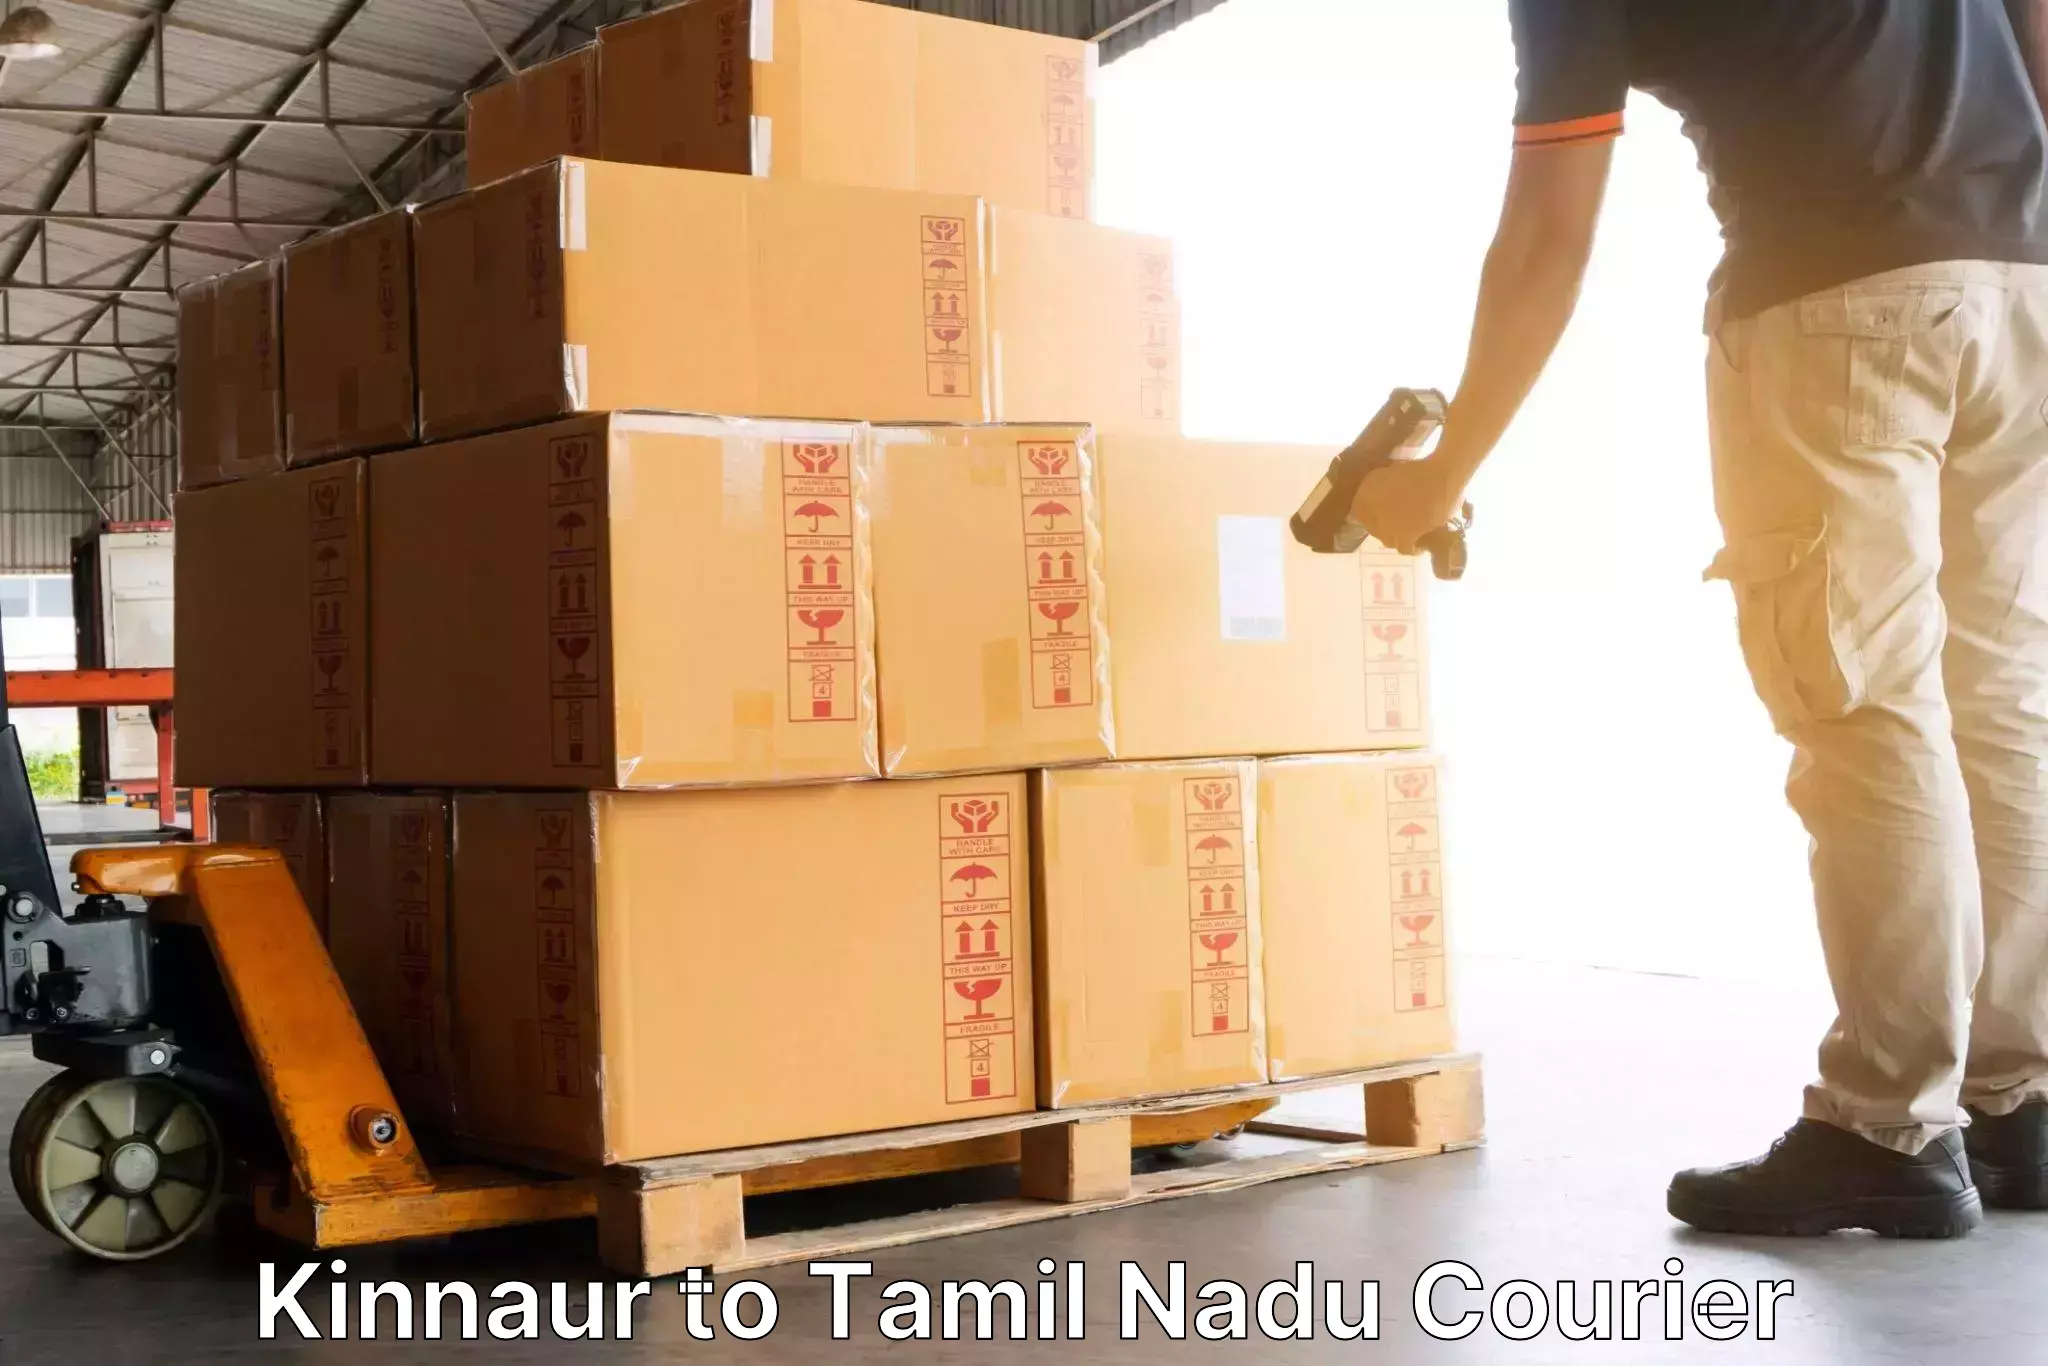 Courier service partnerships Kinnaur to Peravurani